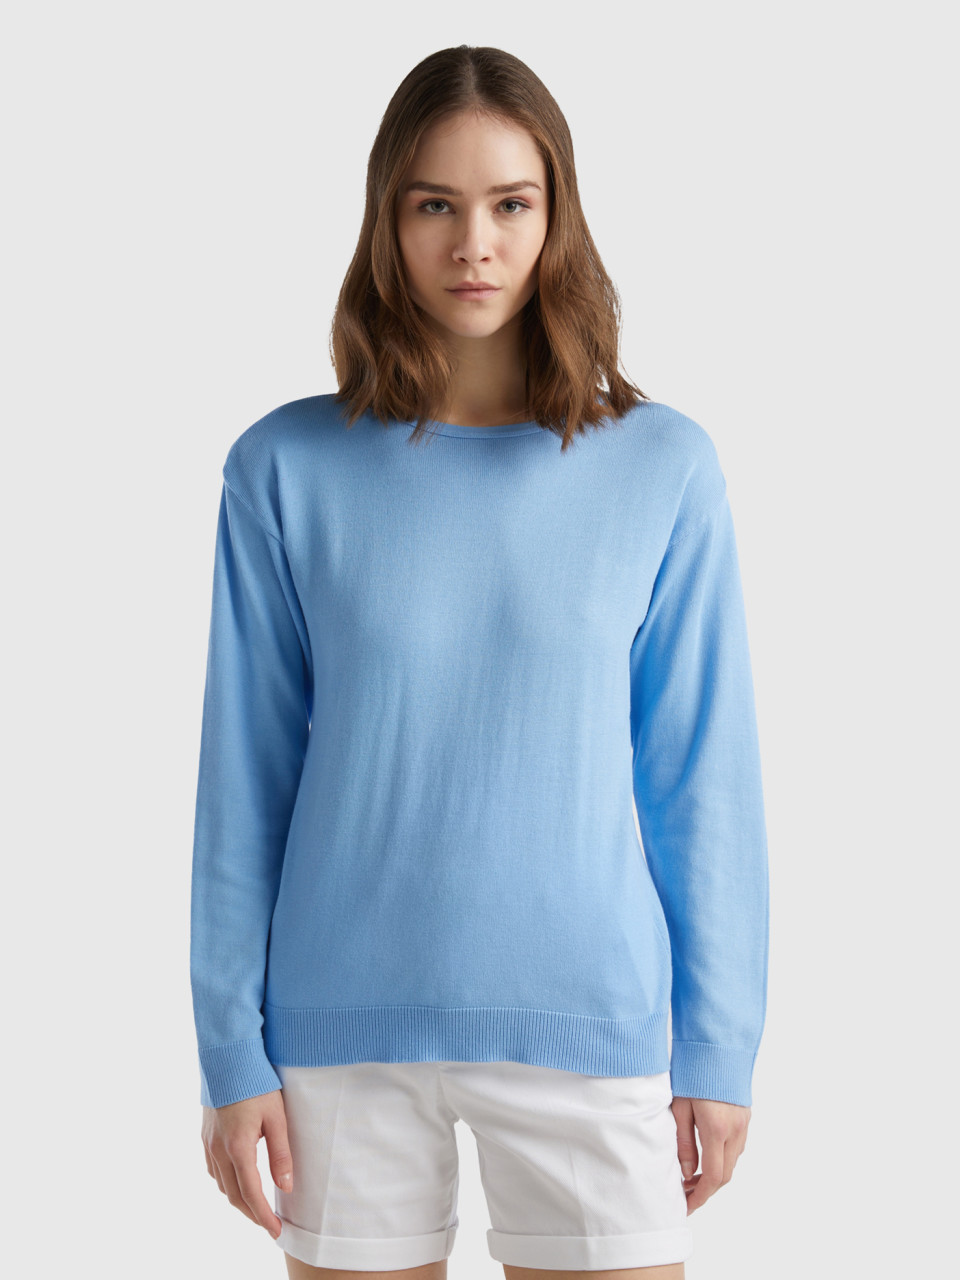 Benetton, Boat Neck Sweater, Light Blue, Women